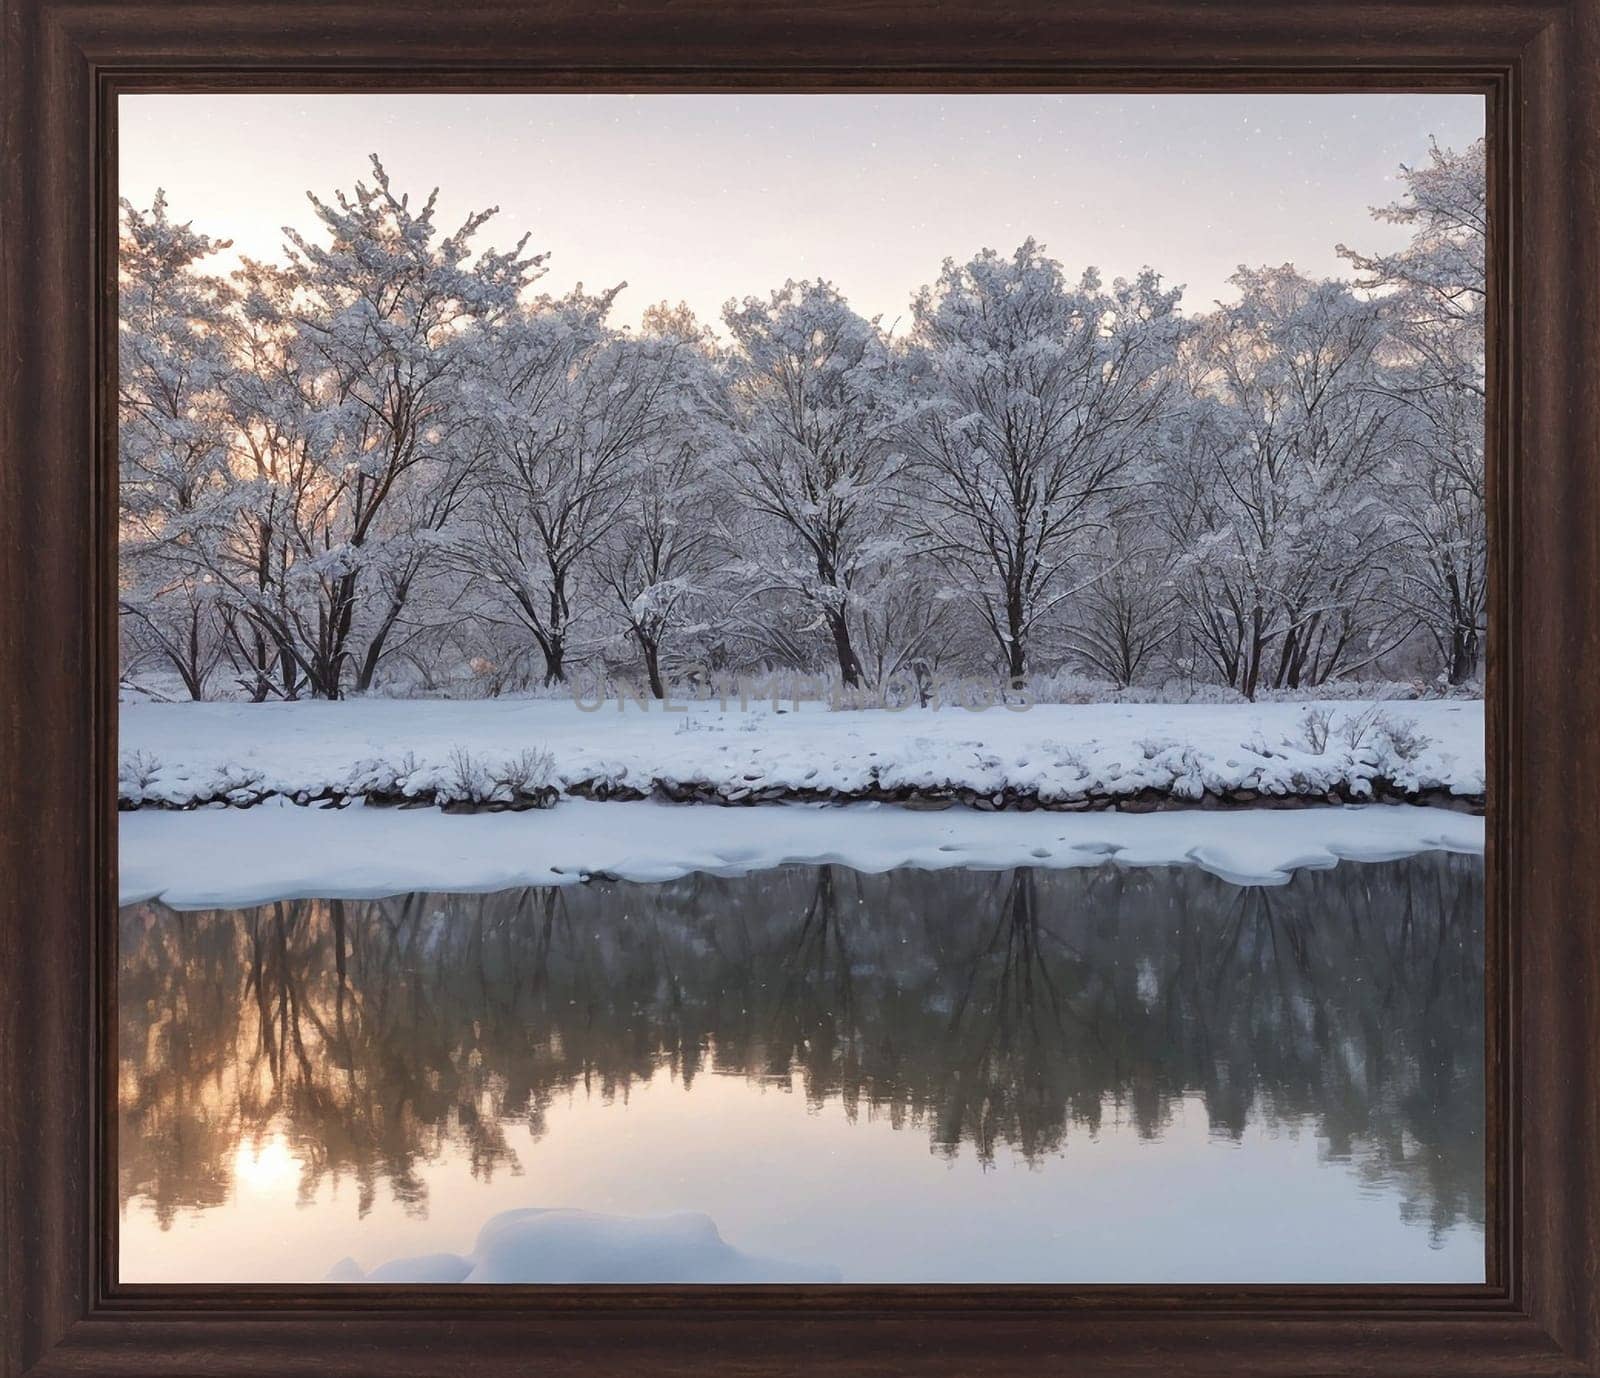 Beautiful winter landscape. High quality photo